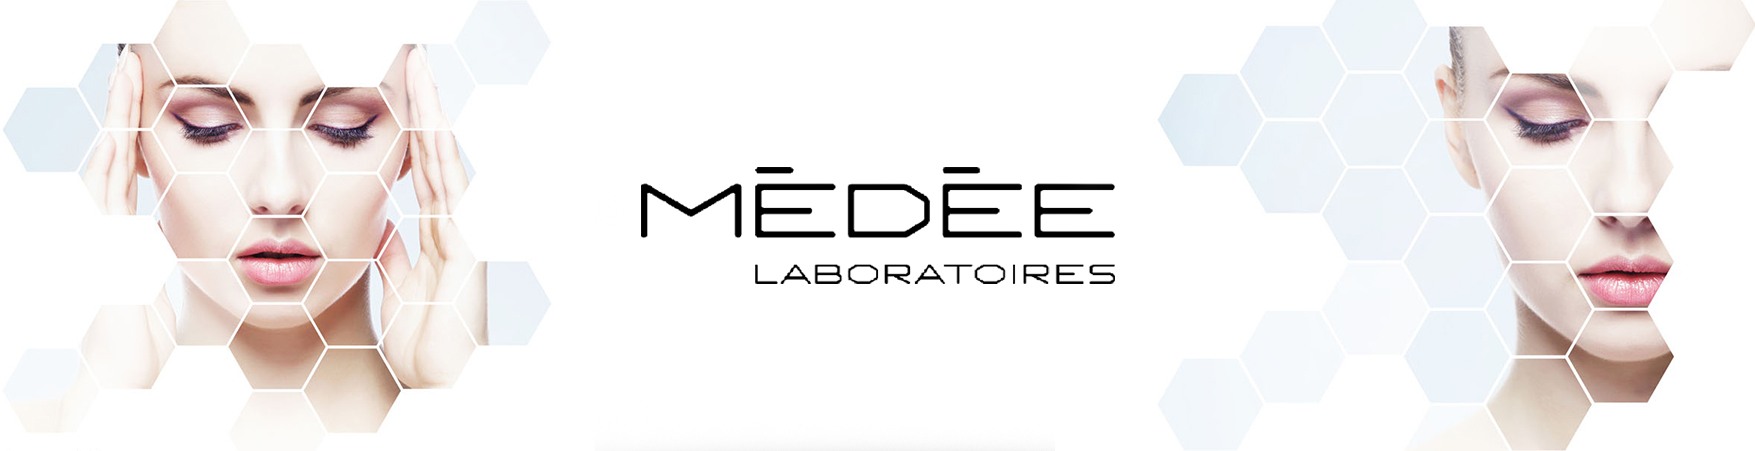 Medee Laboratories